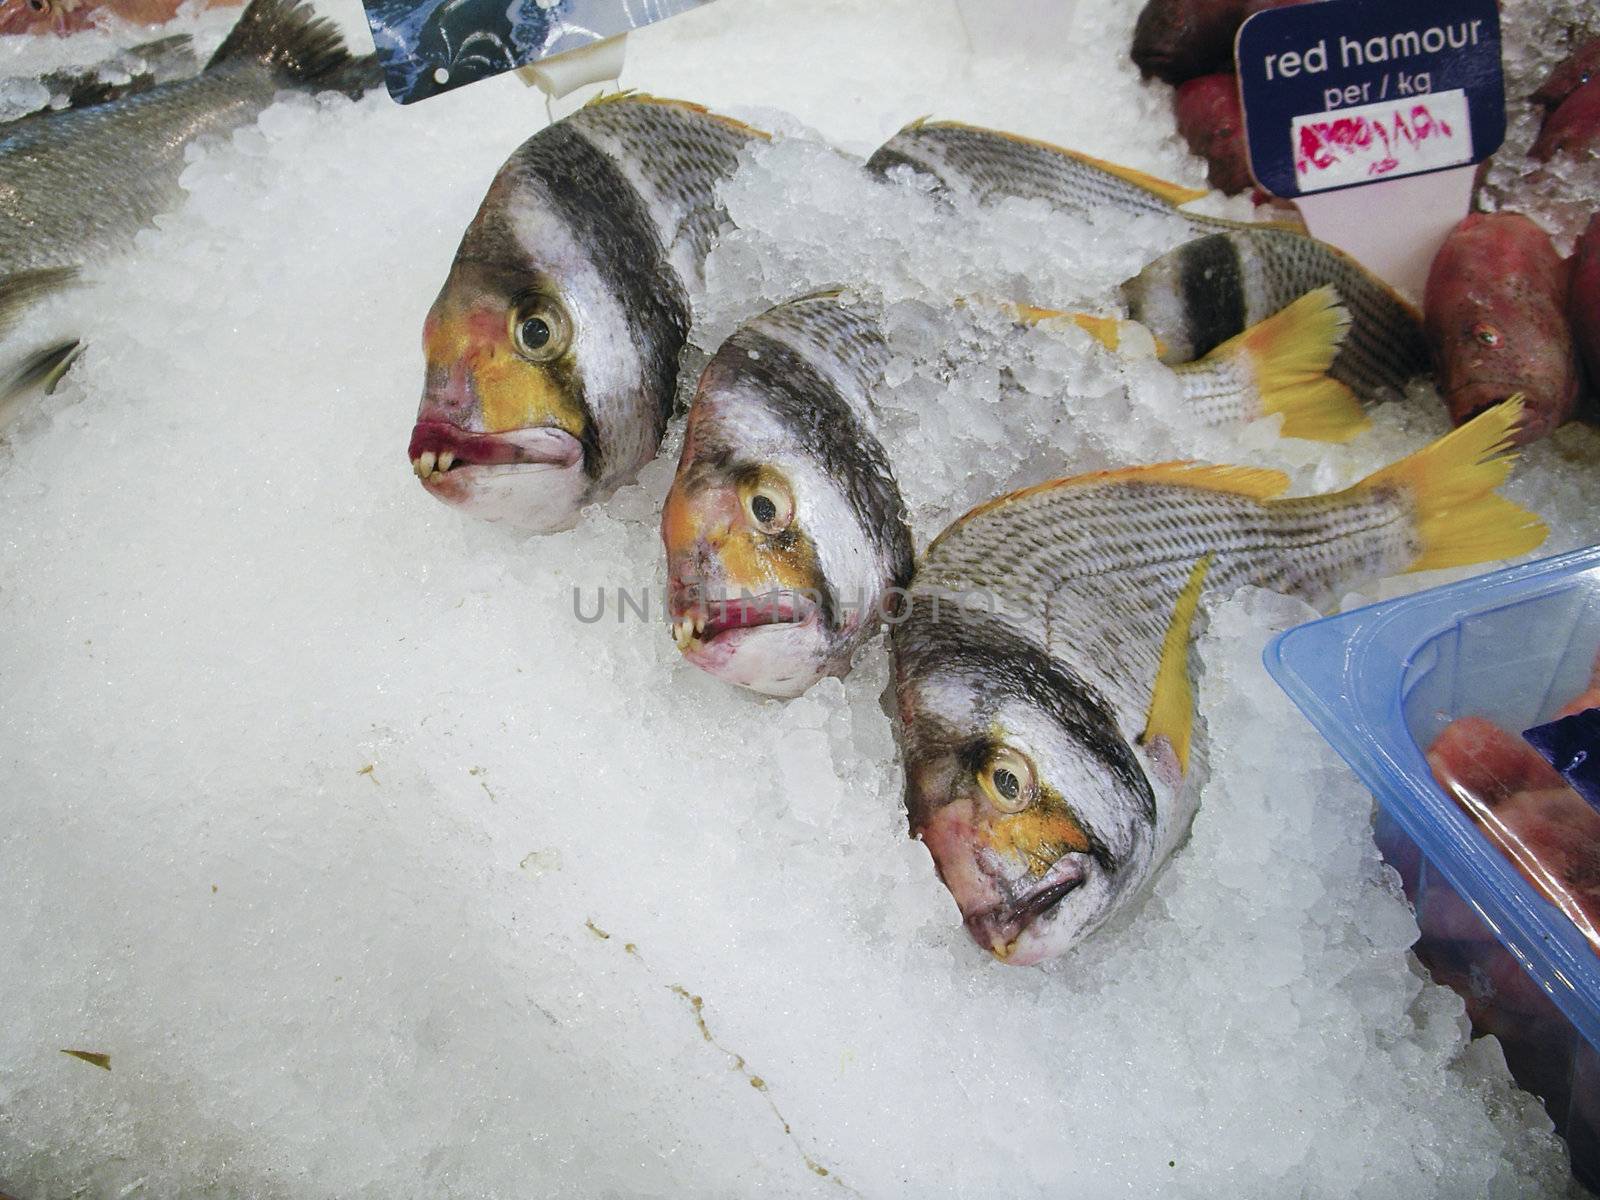 Hamour fish on ice in a supermarket in Dubai